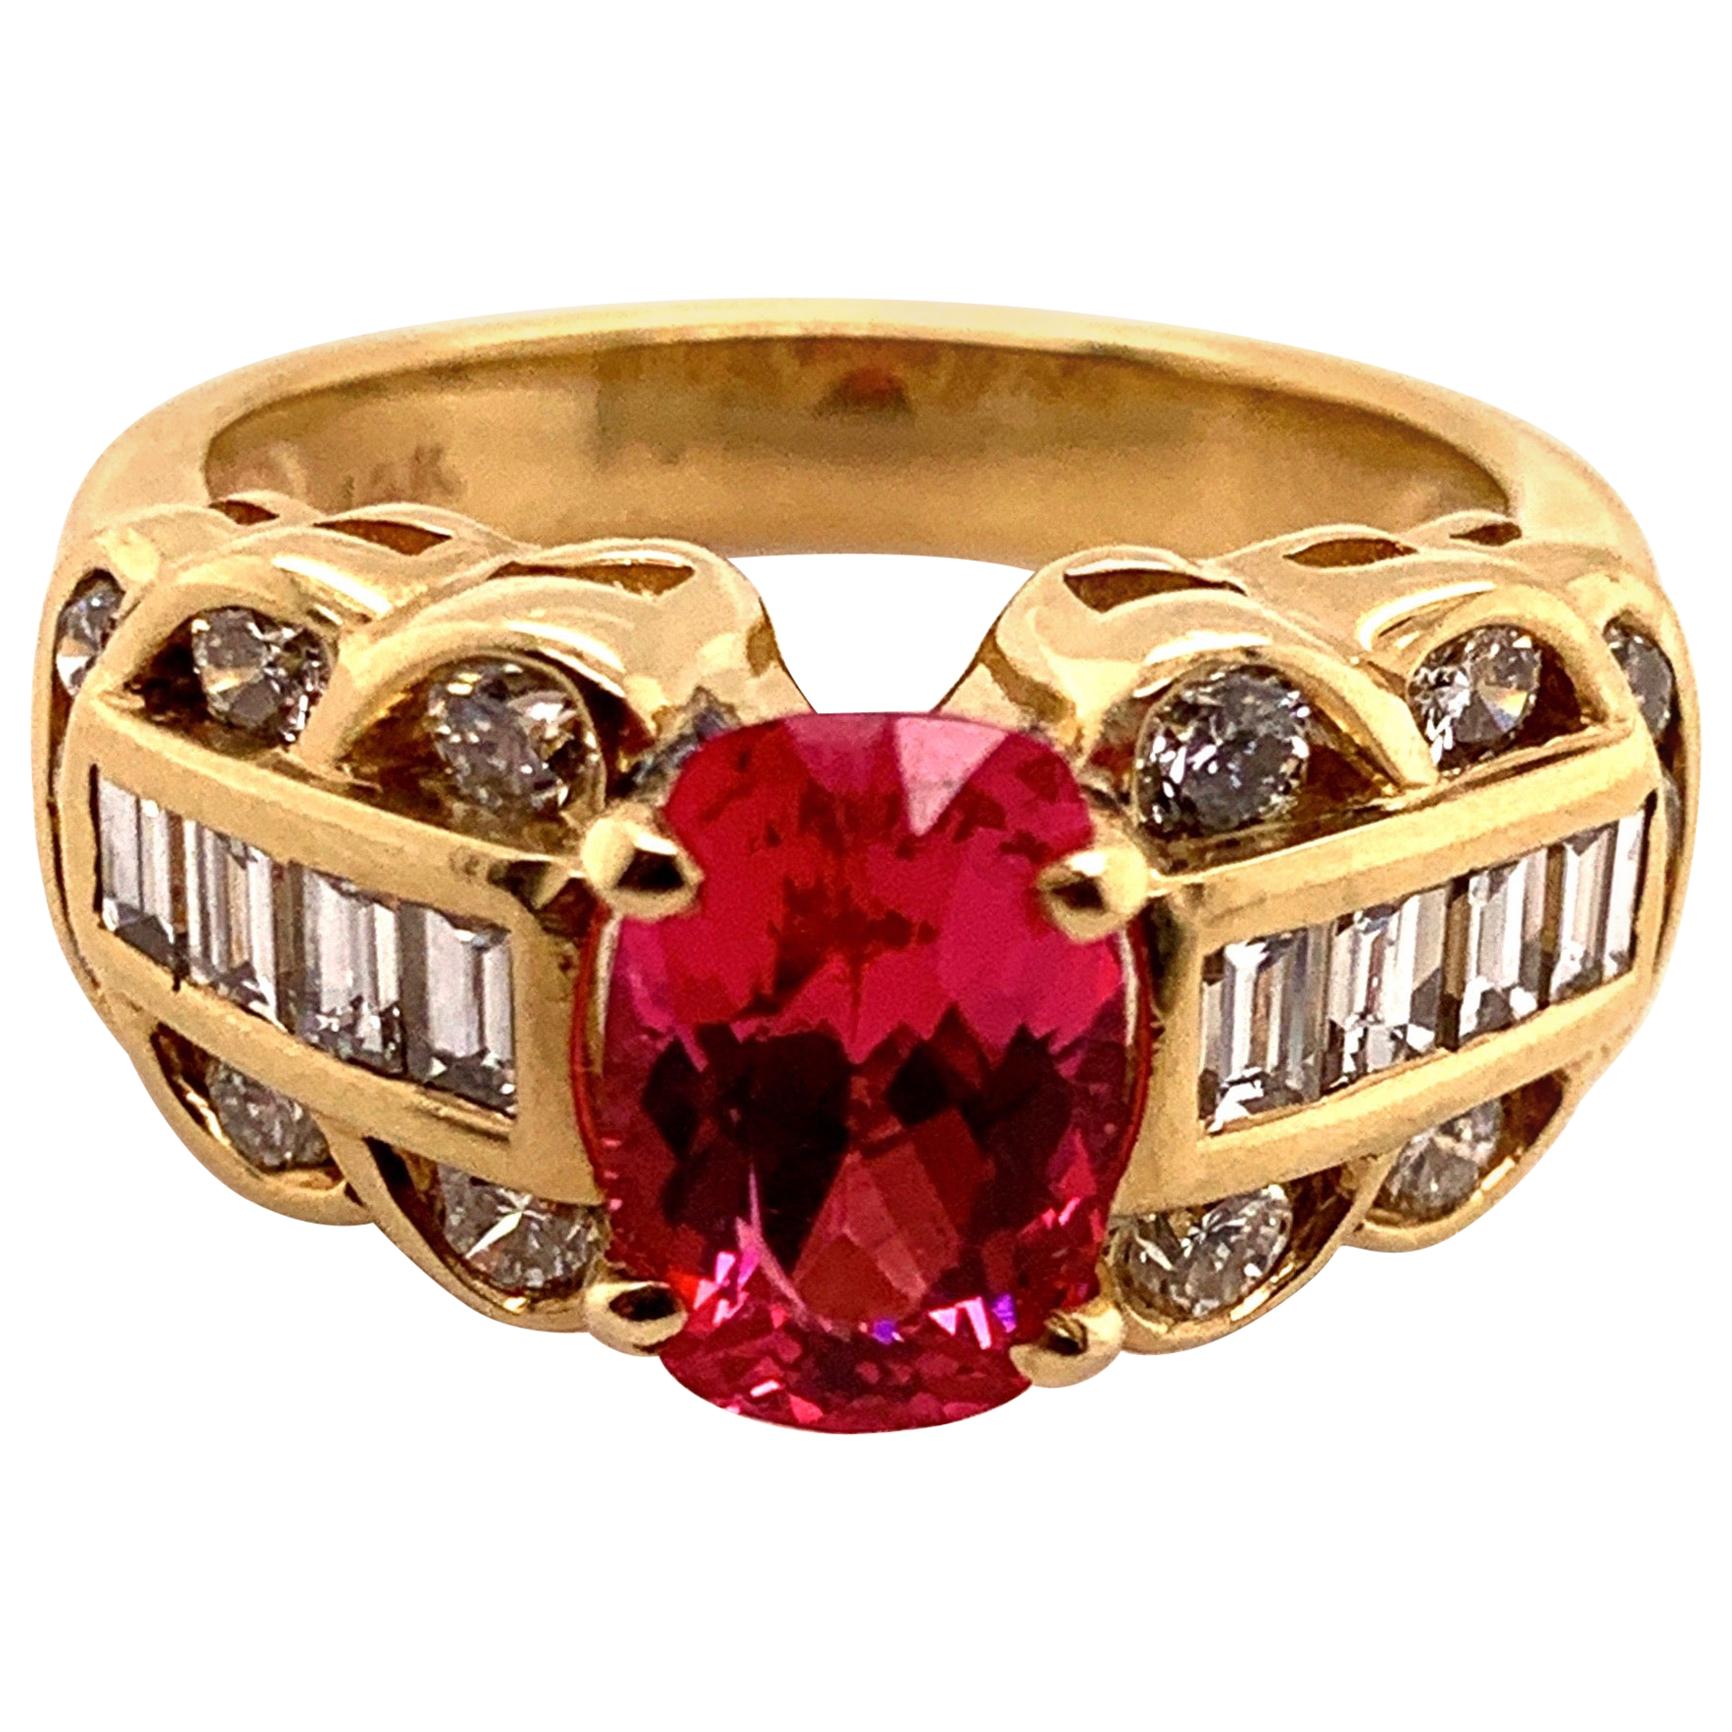 1.85 Carat Reddish Pink Spinel and Diamond Gold Ring